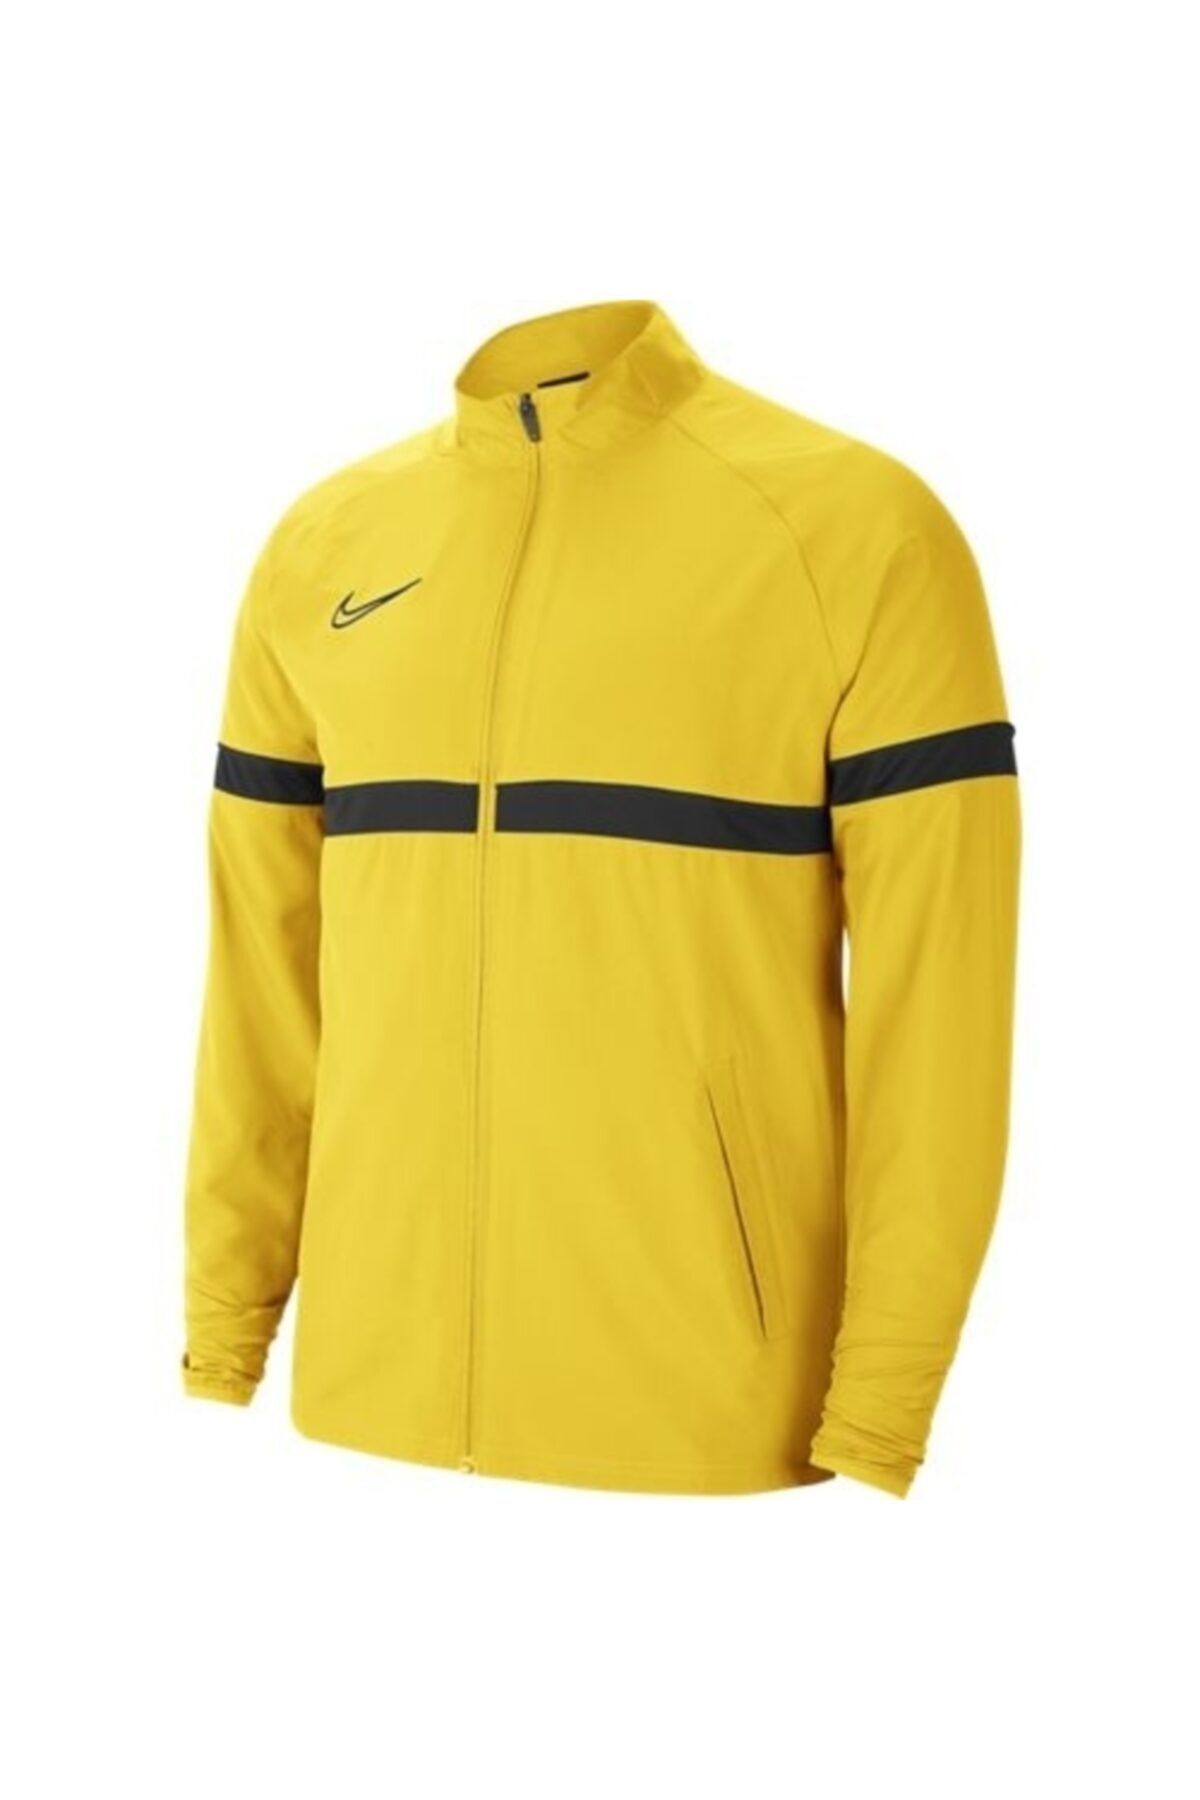 Nike Dri-fit Academy Woven Track Sarı Erkek Ceket -cw6118-719